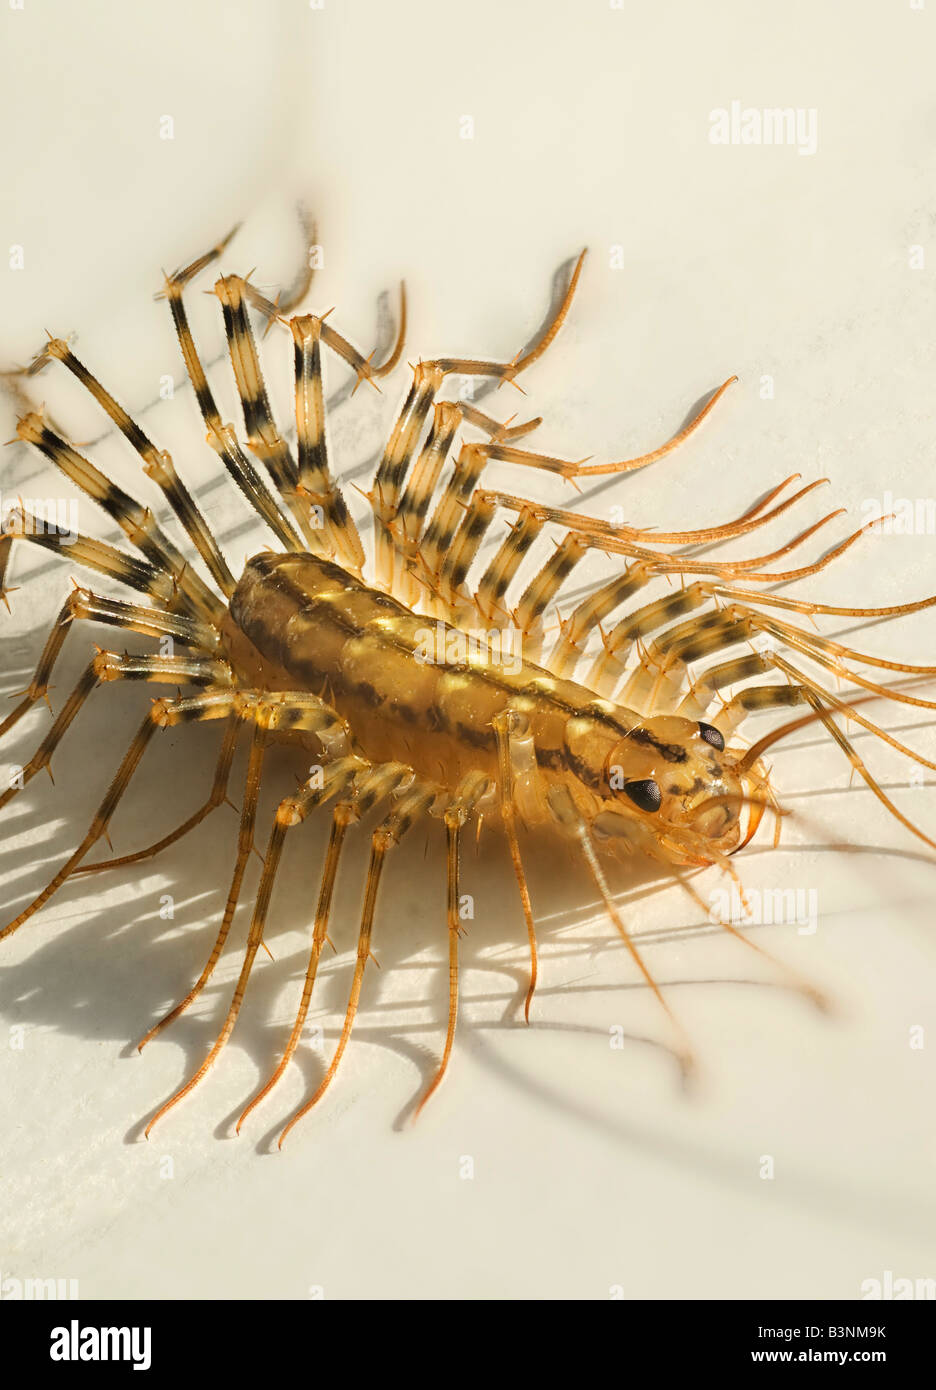 house centipede Scutigera coleoptrata Stock Photo